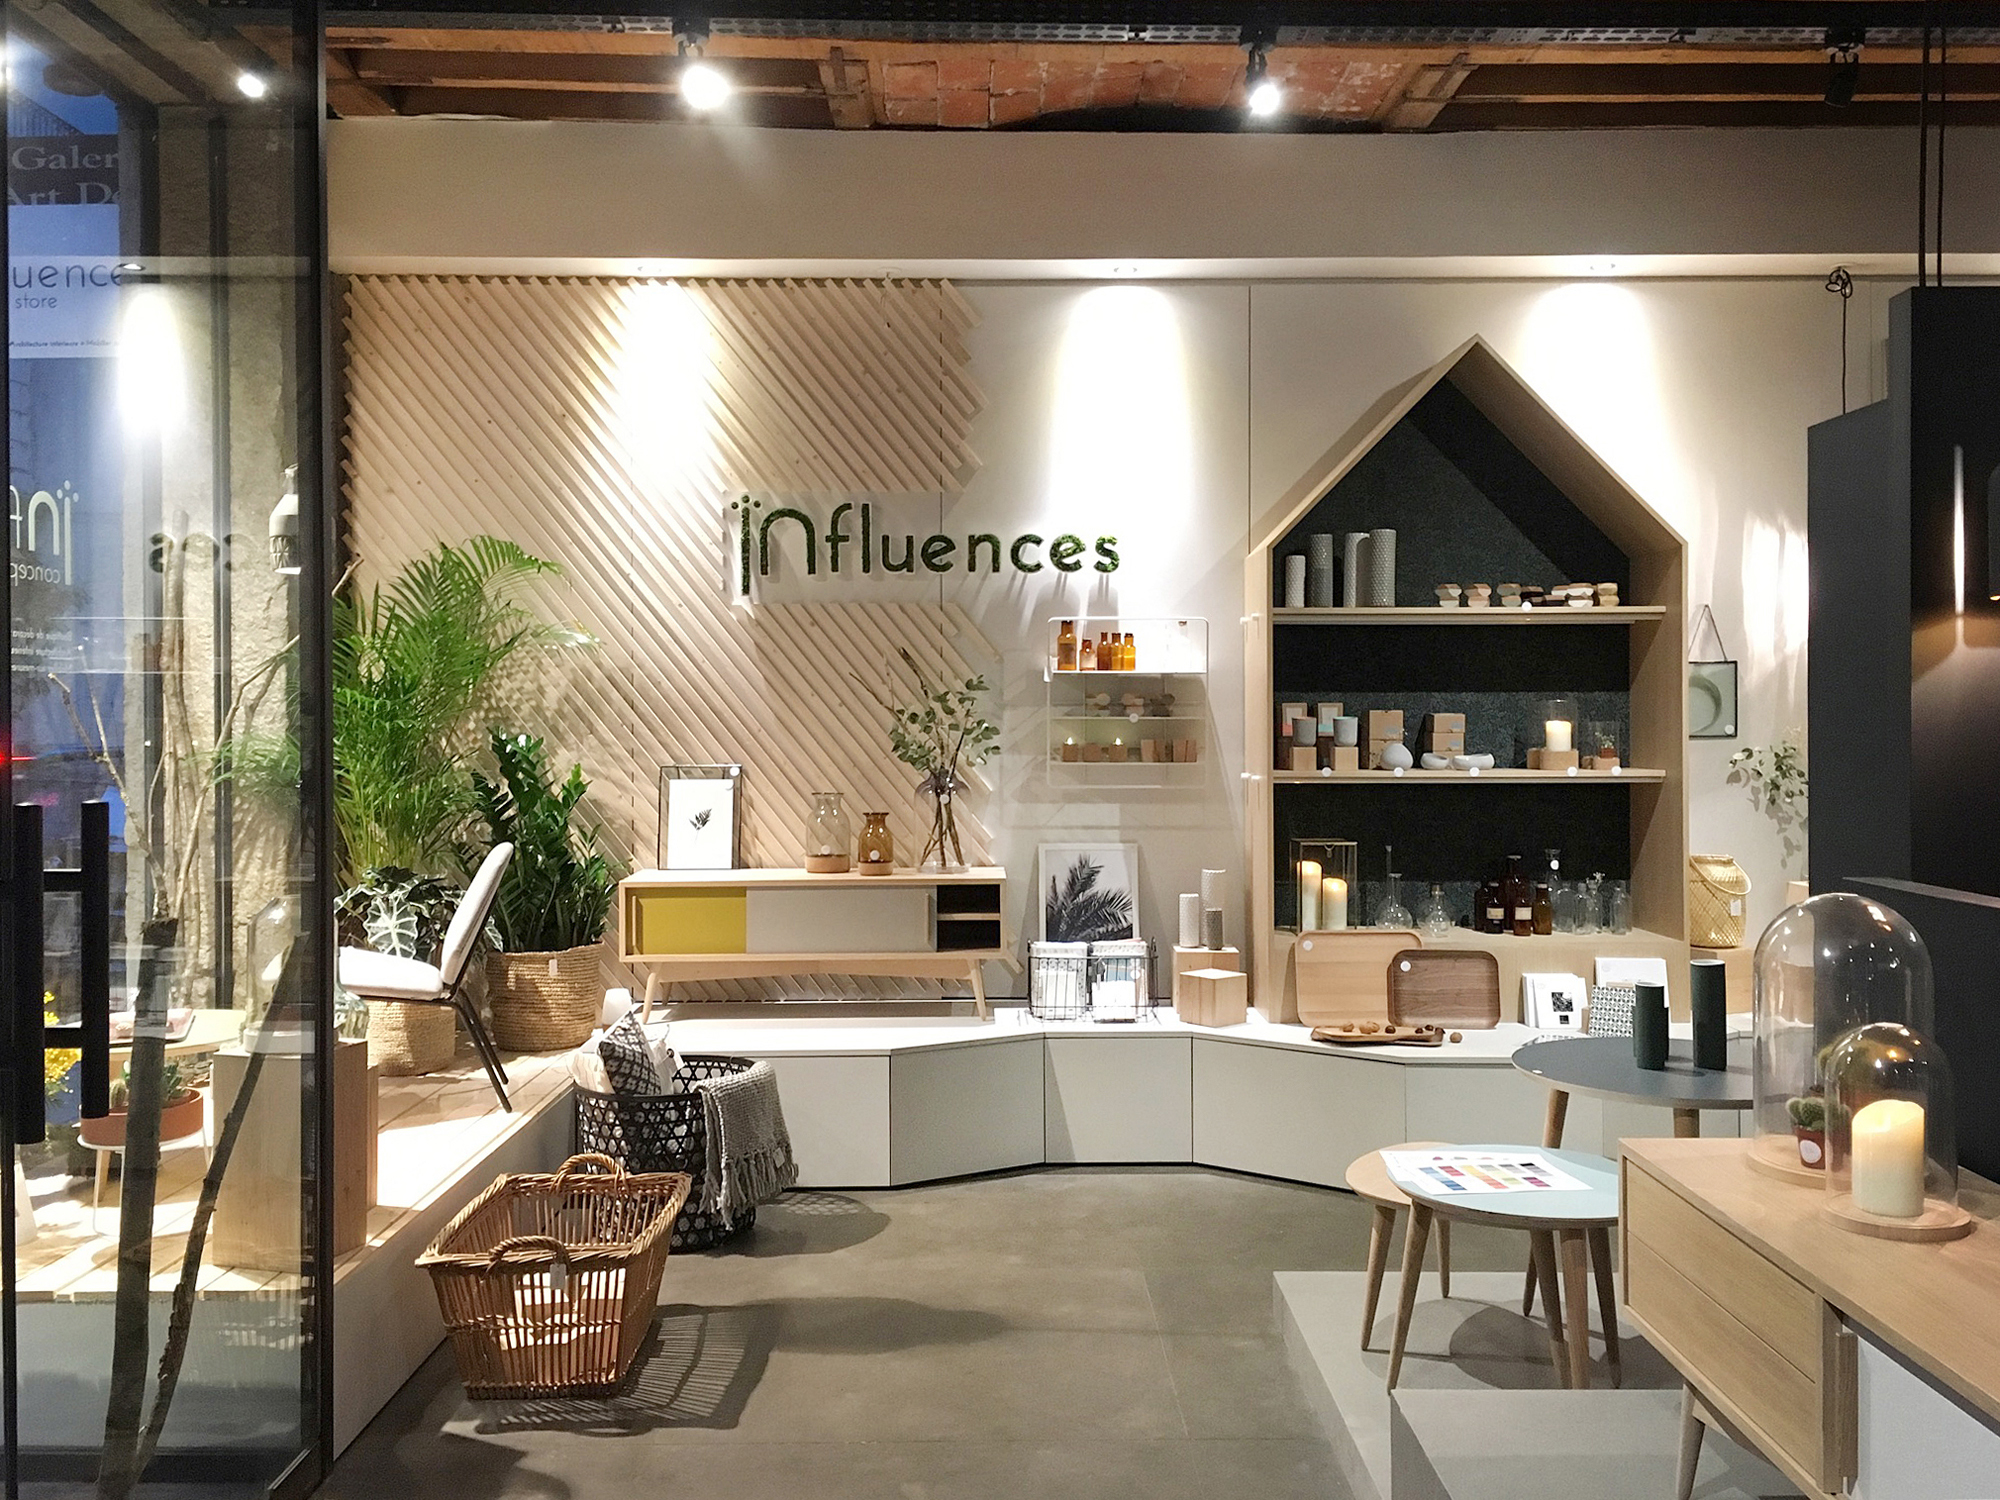 Influences_concept_store_Lyon_gentlemen_designers